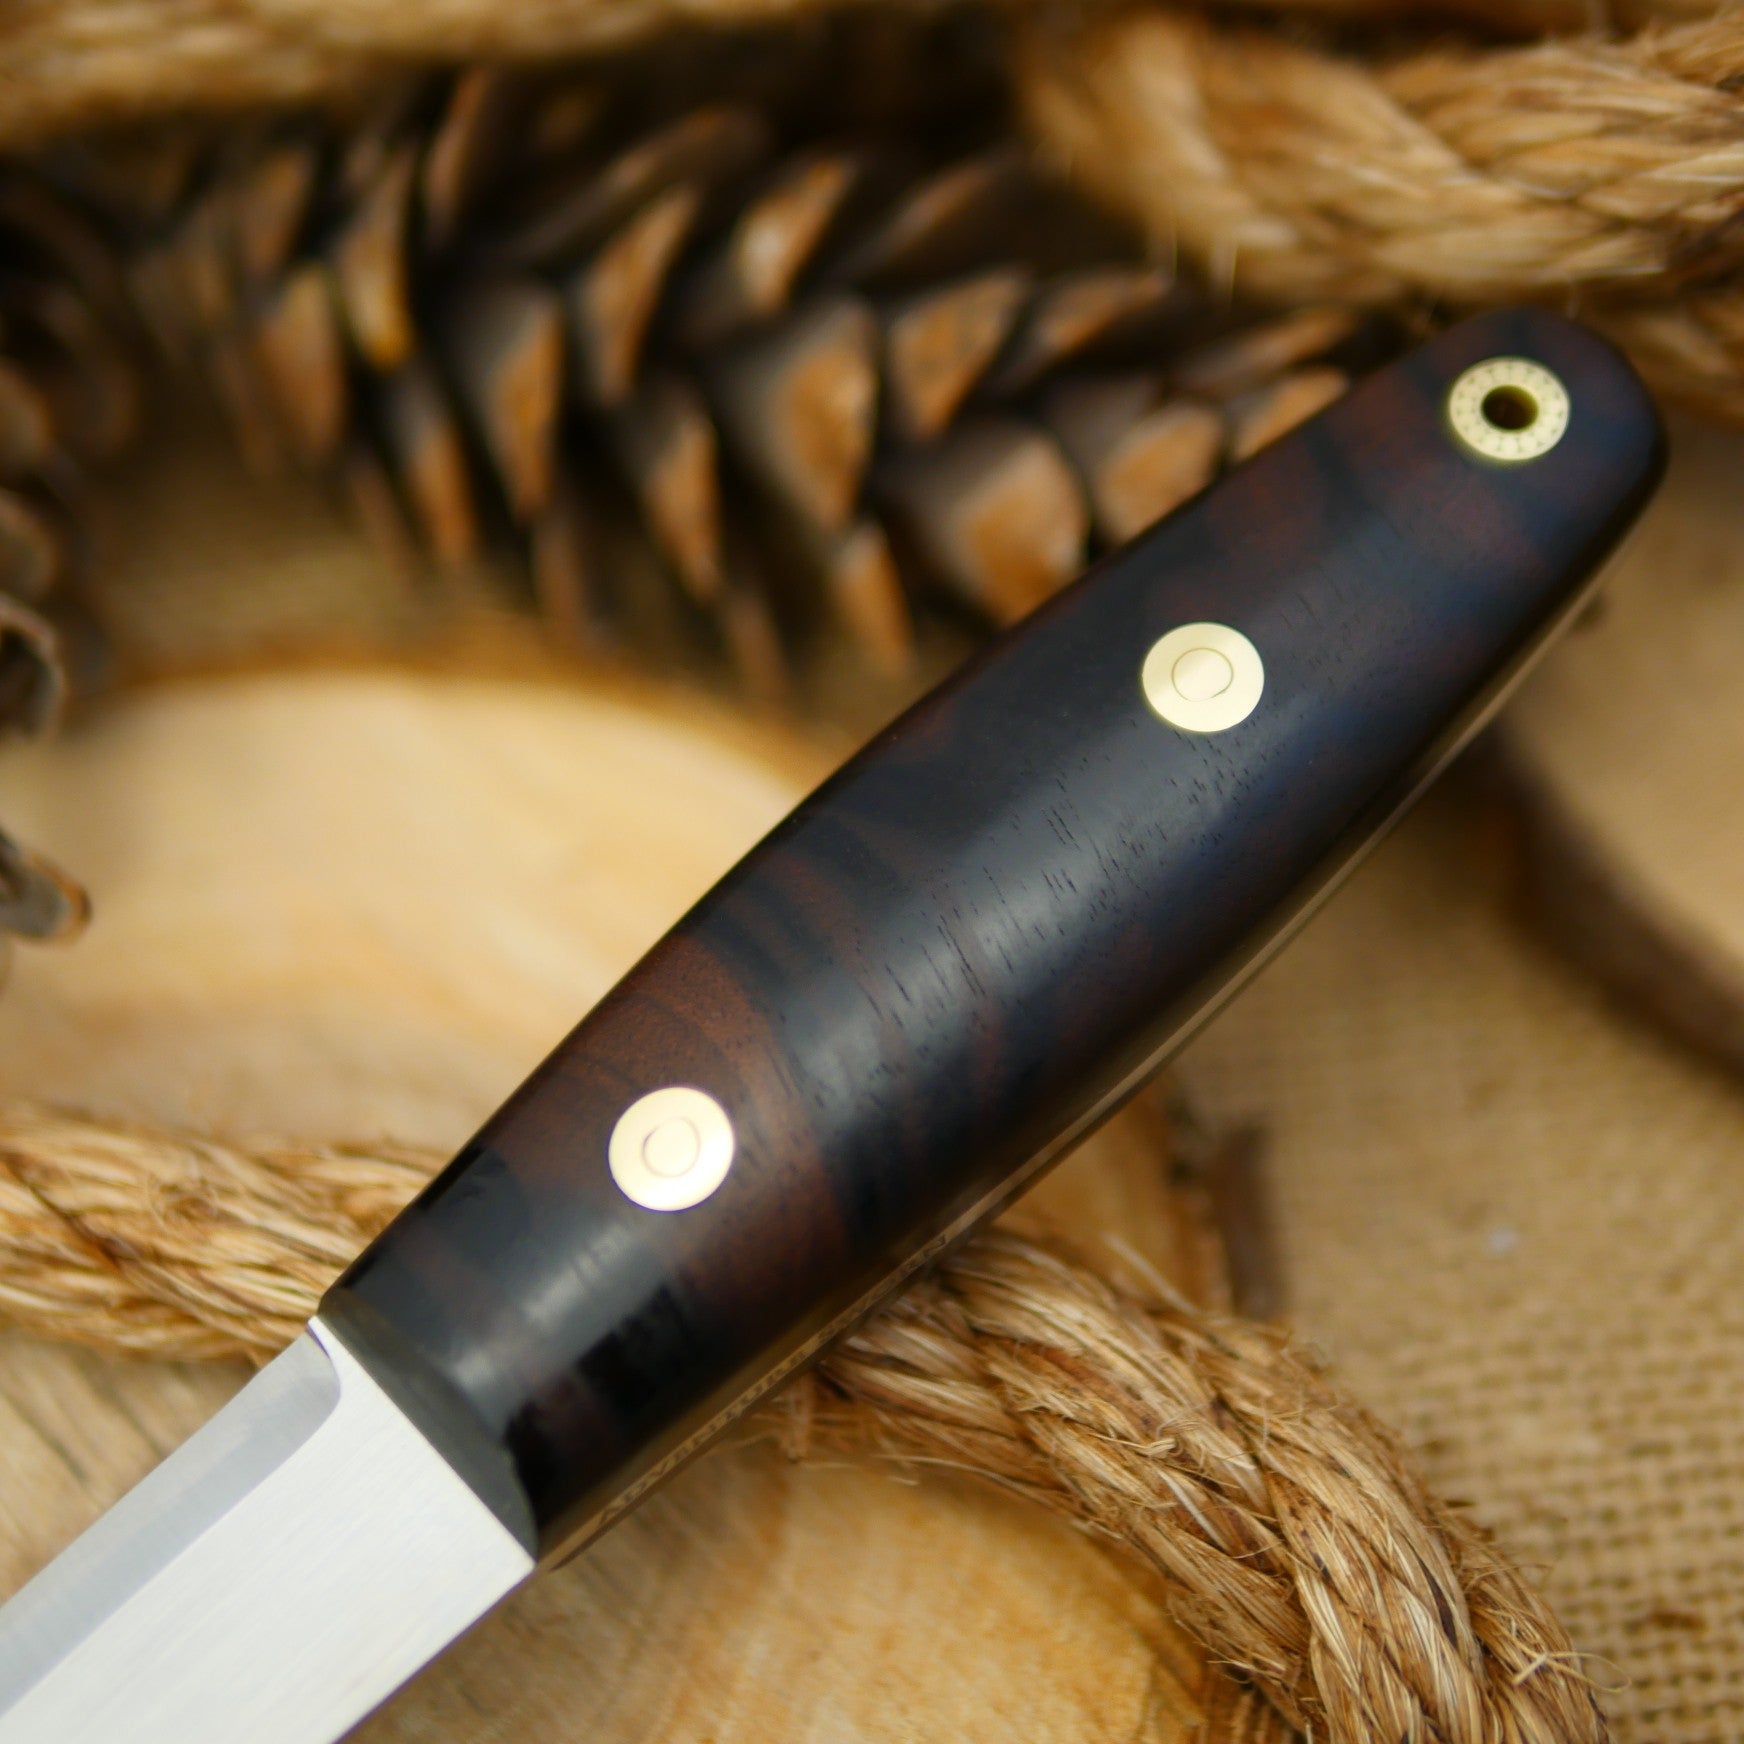 An Adventure Sworn Woodsman bushcraft knife with katalox handle scales.